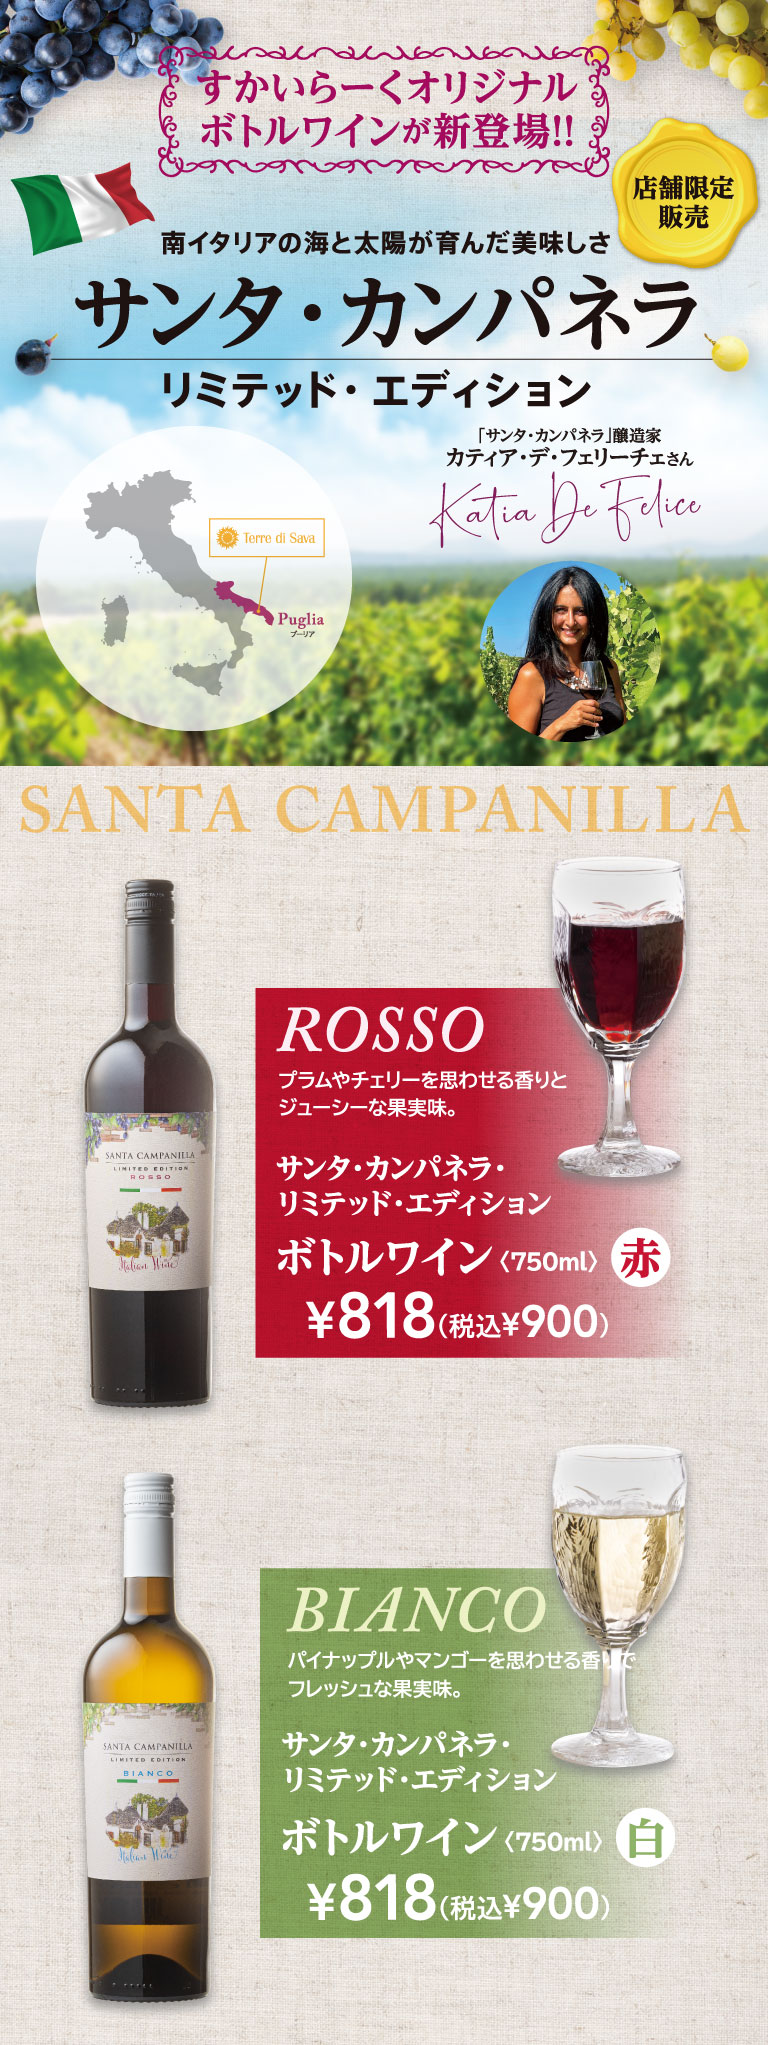 Santa Campanella Limited Edition ขวดไวน์ แดง ขาว สกายลาร์ค (すかいらーく) Original